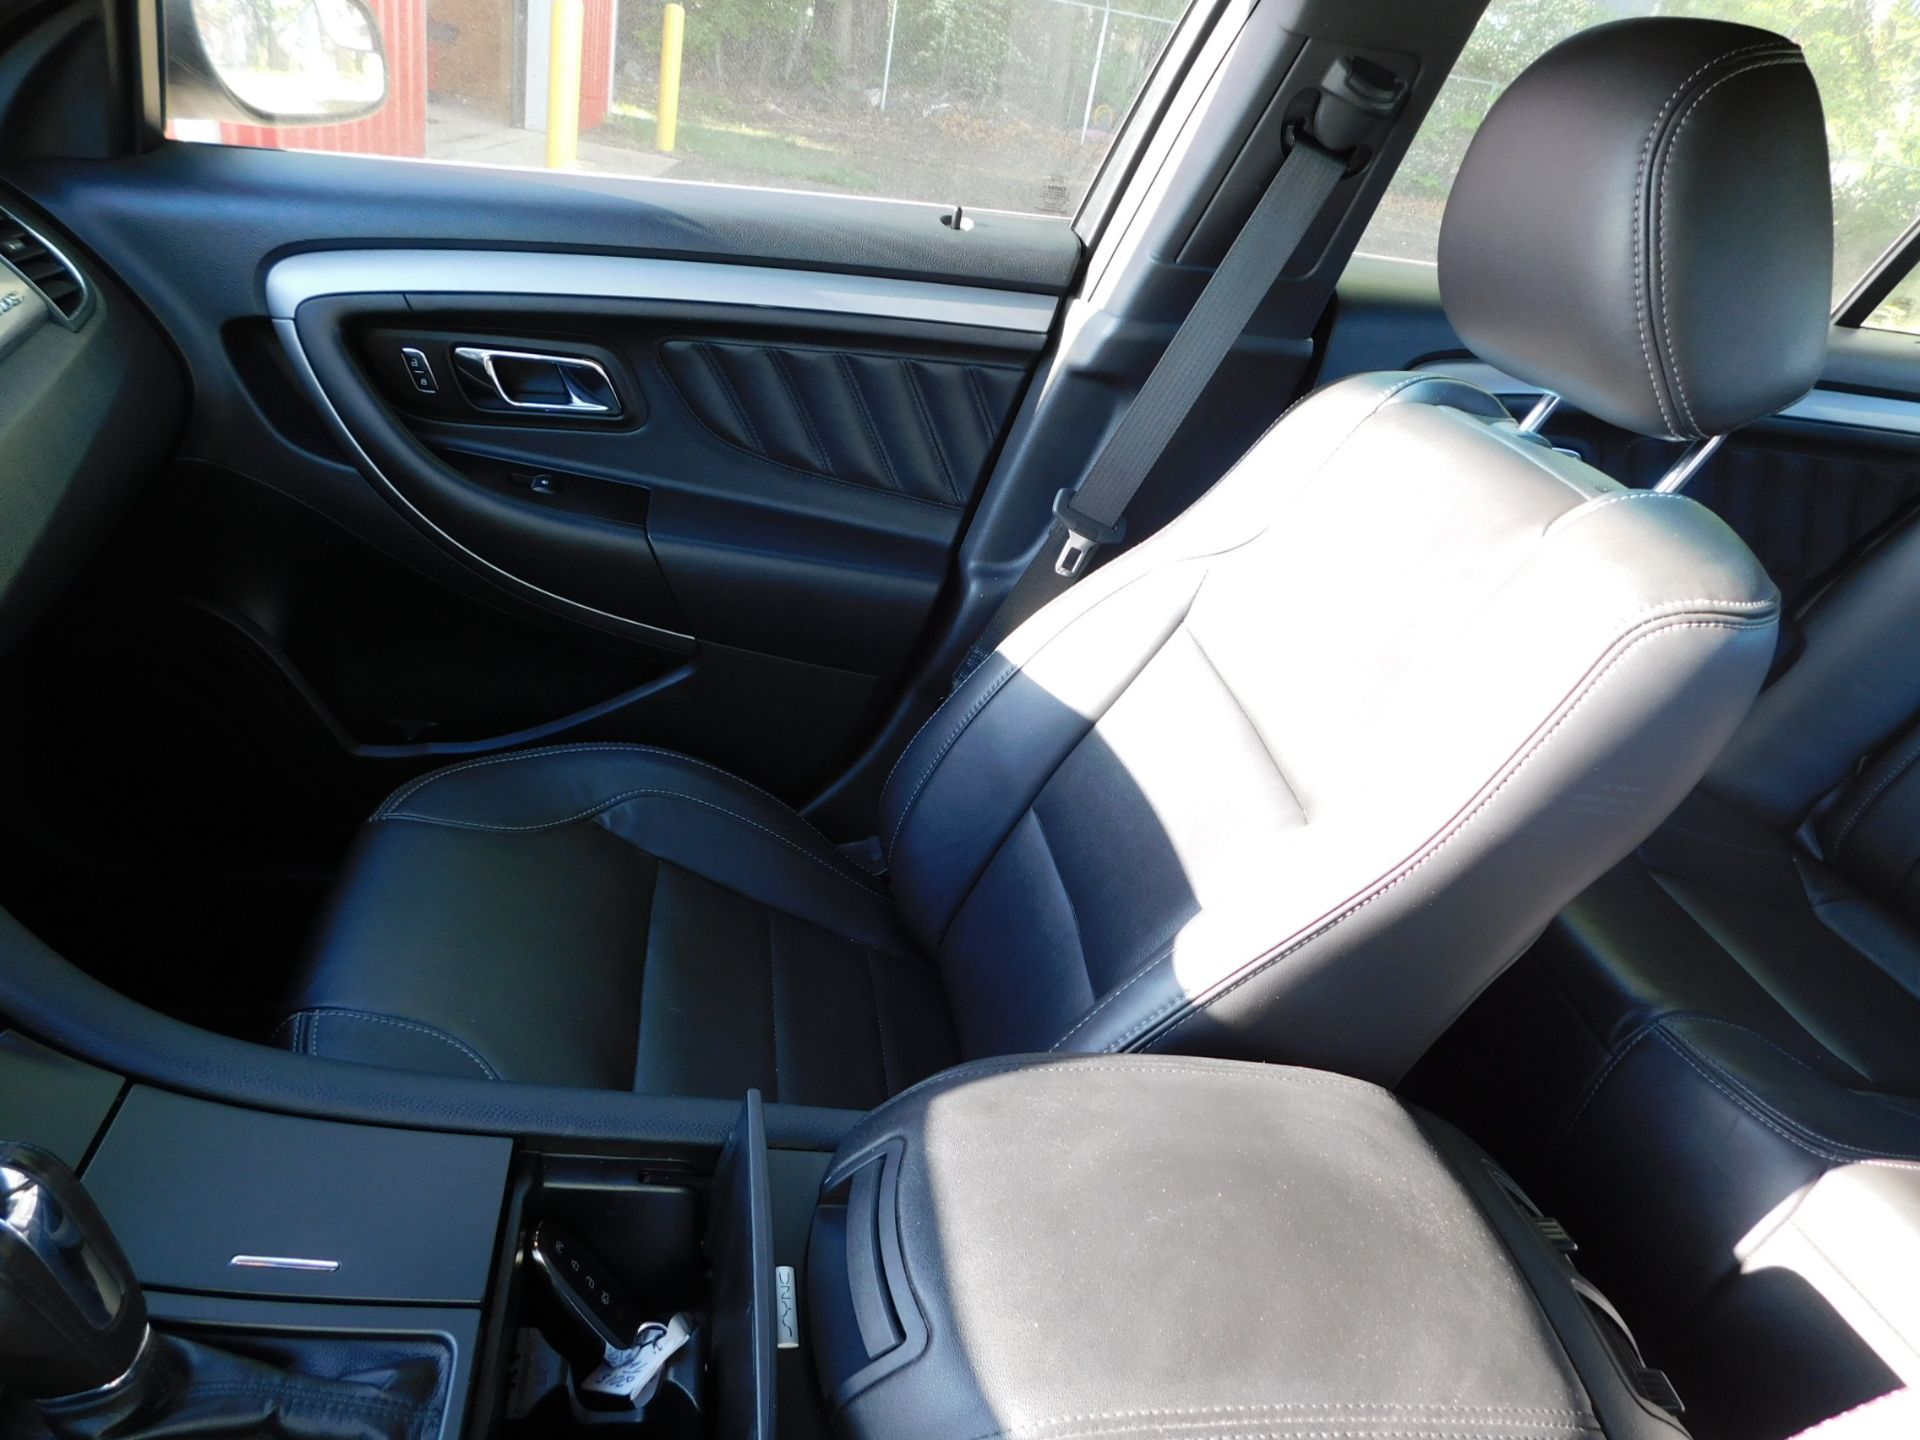 2015 Ford Taurus SEL 4-Door Sedan, vin 1FAHP2E80FG182717, Automatic Transmission, PW,PL,AC,Leather - Image 25 of 42